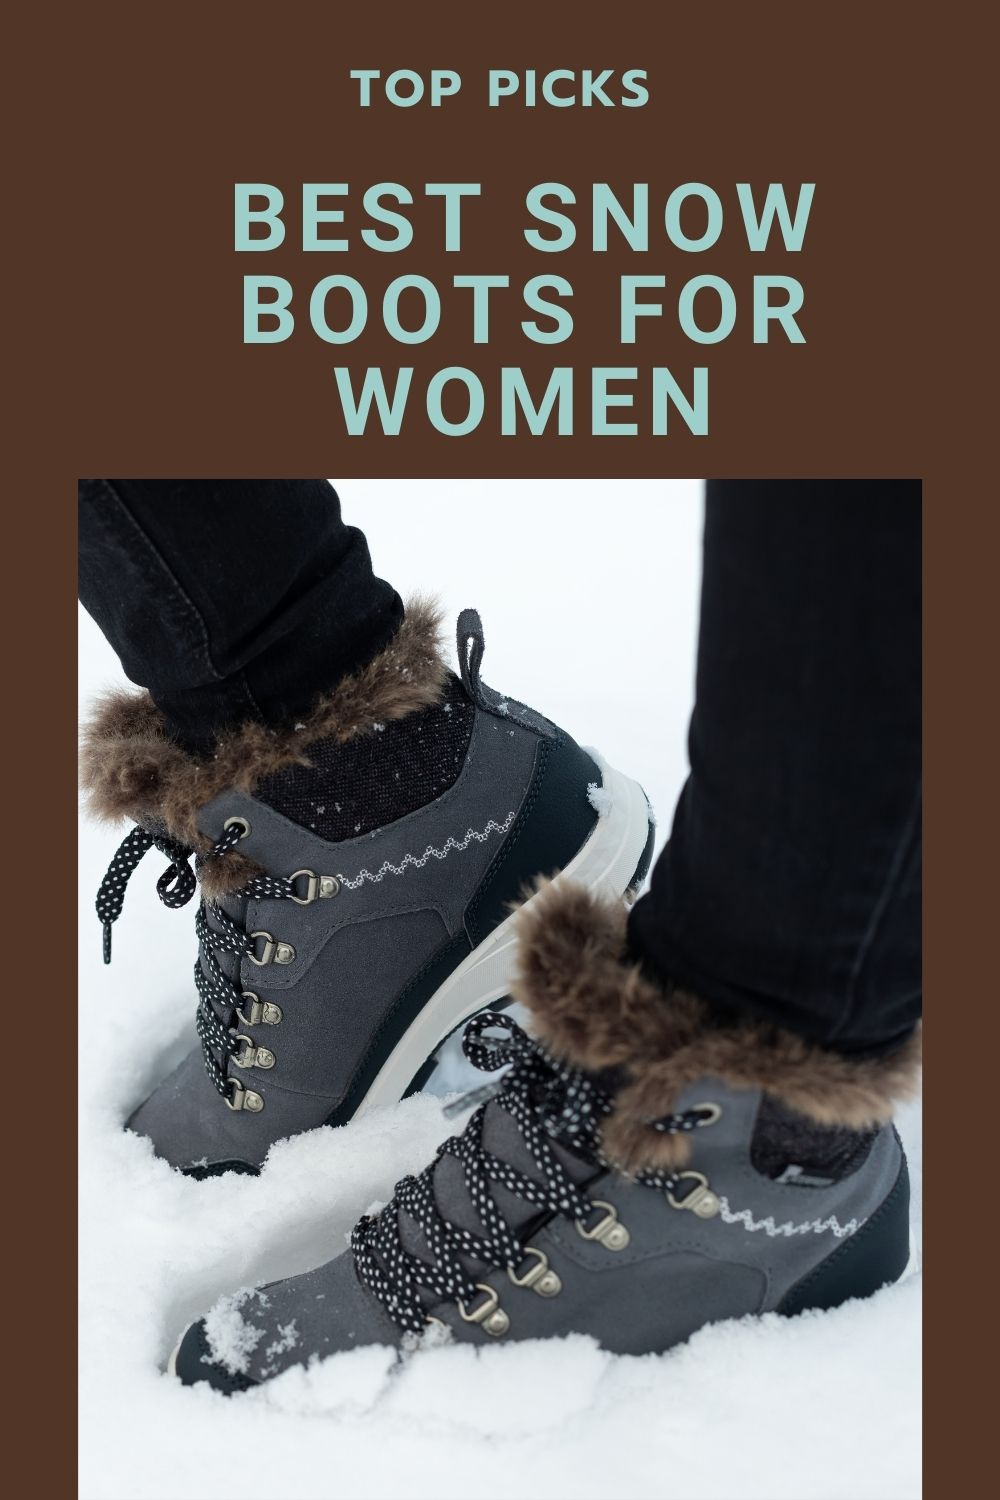 Best Snow Boots for Women: Top Picks